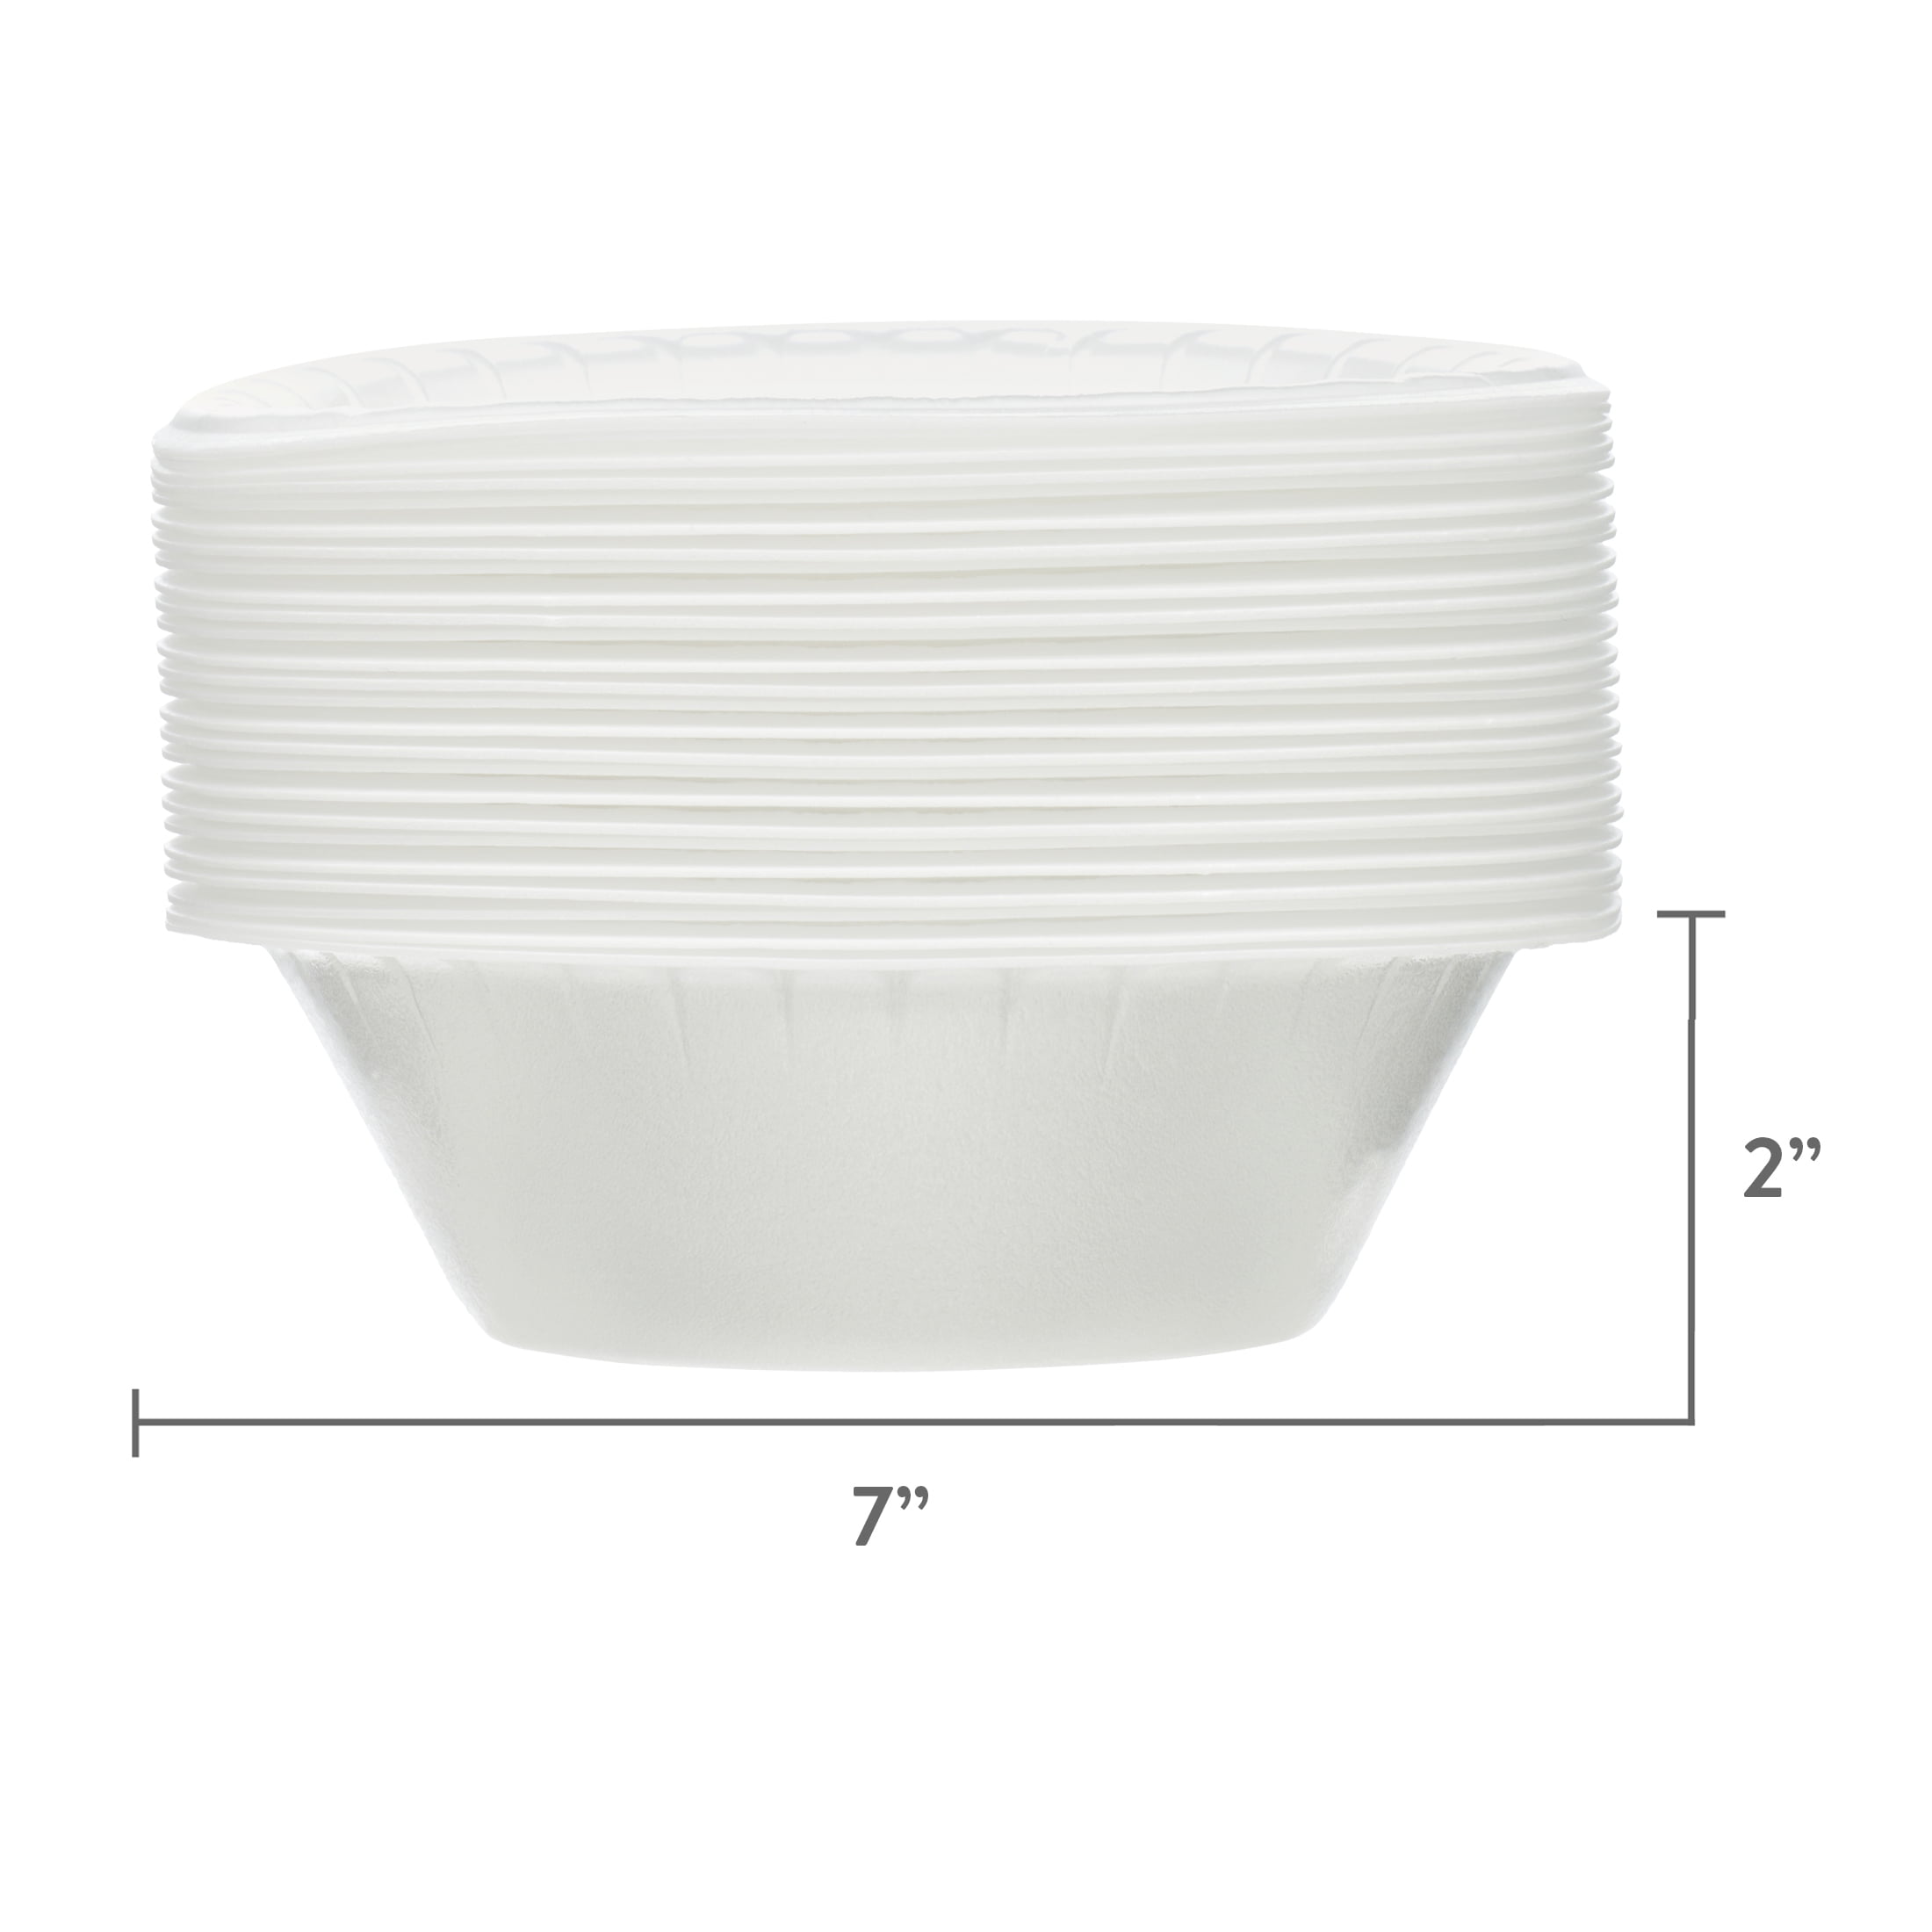 Hefty Everyday Soak Proof 12 oz White Foam Bowls